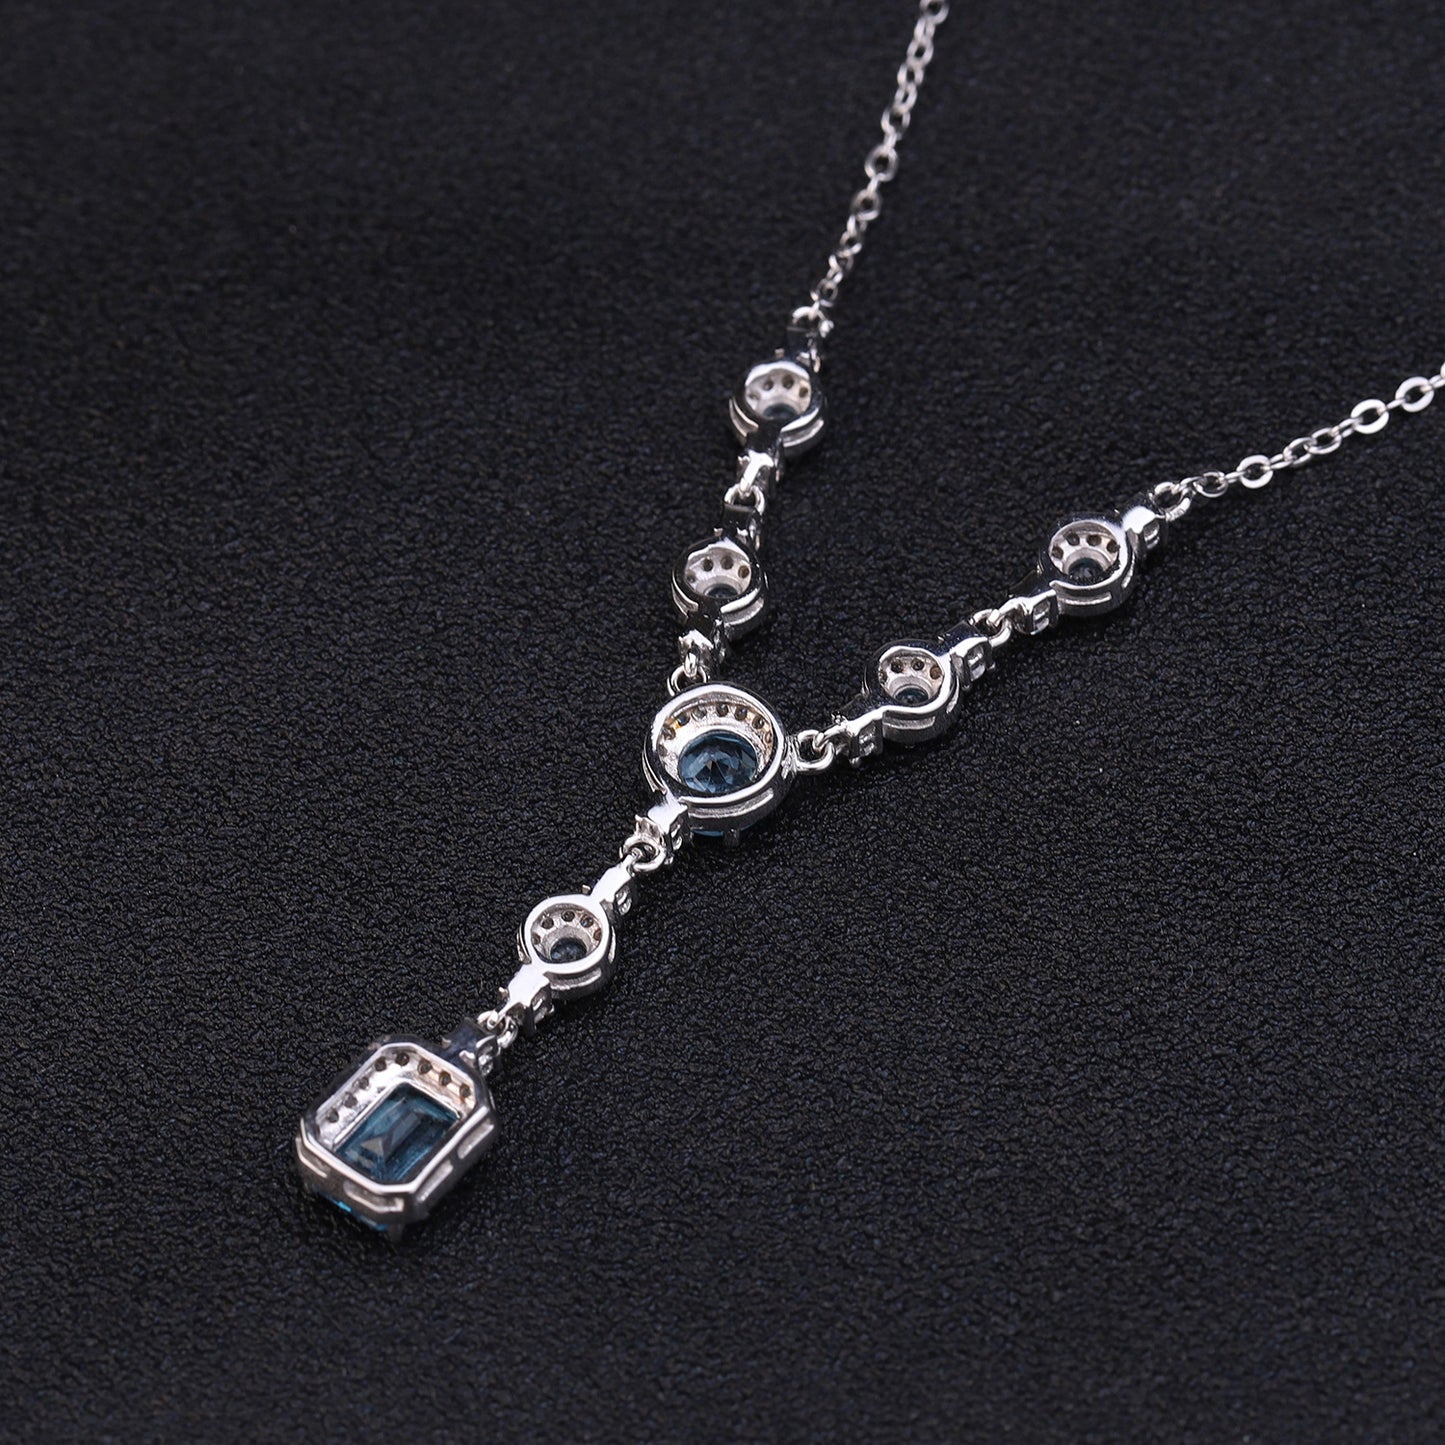 Banquet Jewelry Emerald Cut Natural Gemstones Tassels Silver Necklace